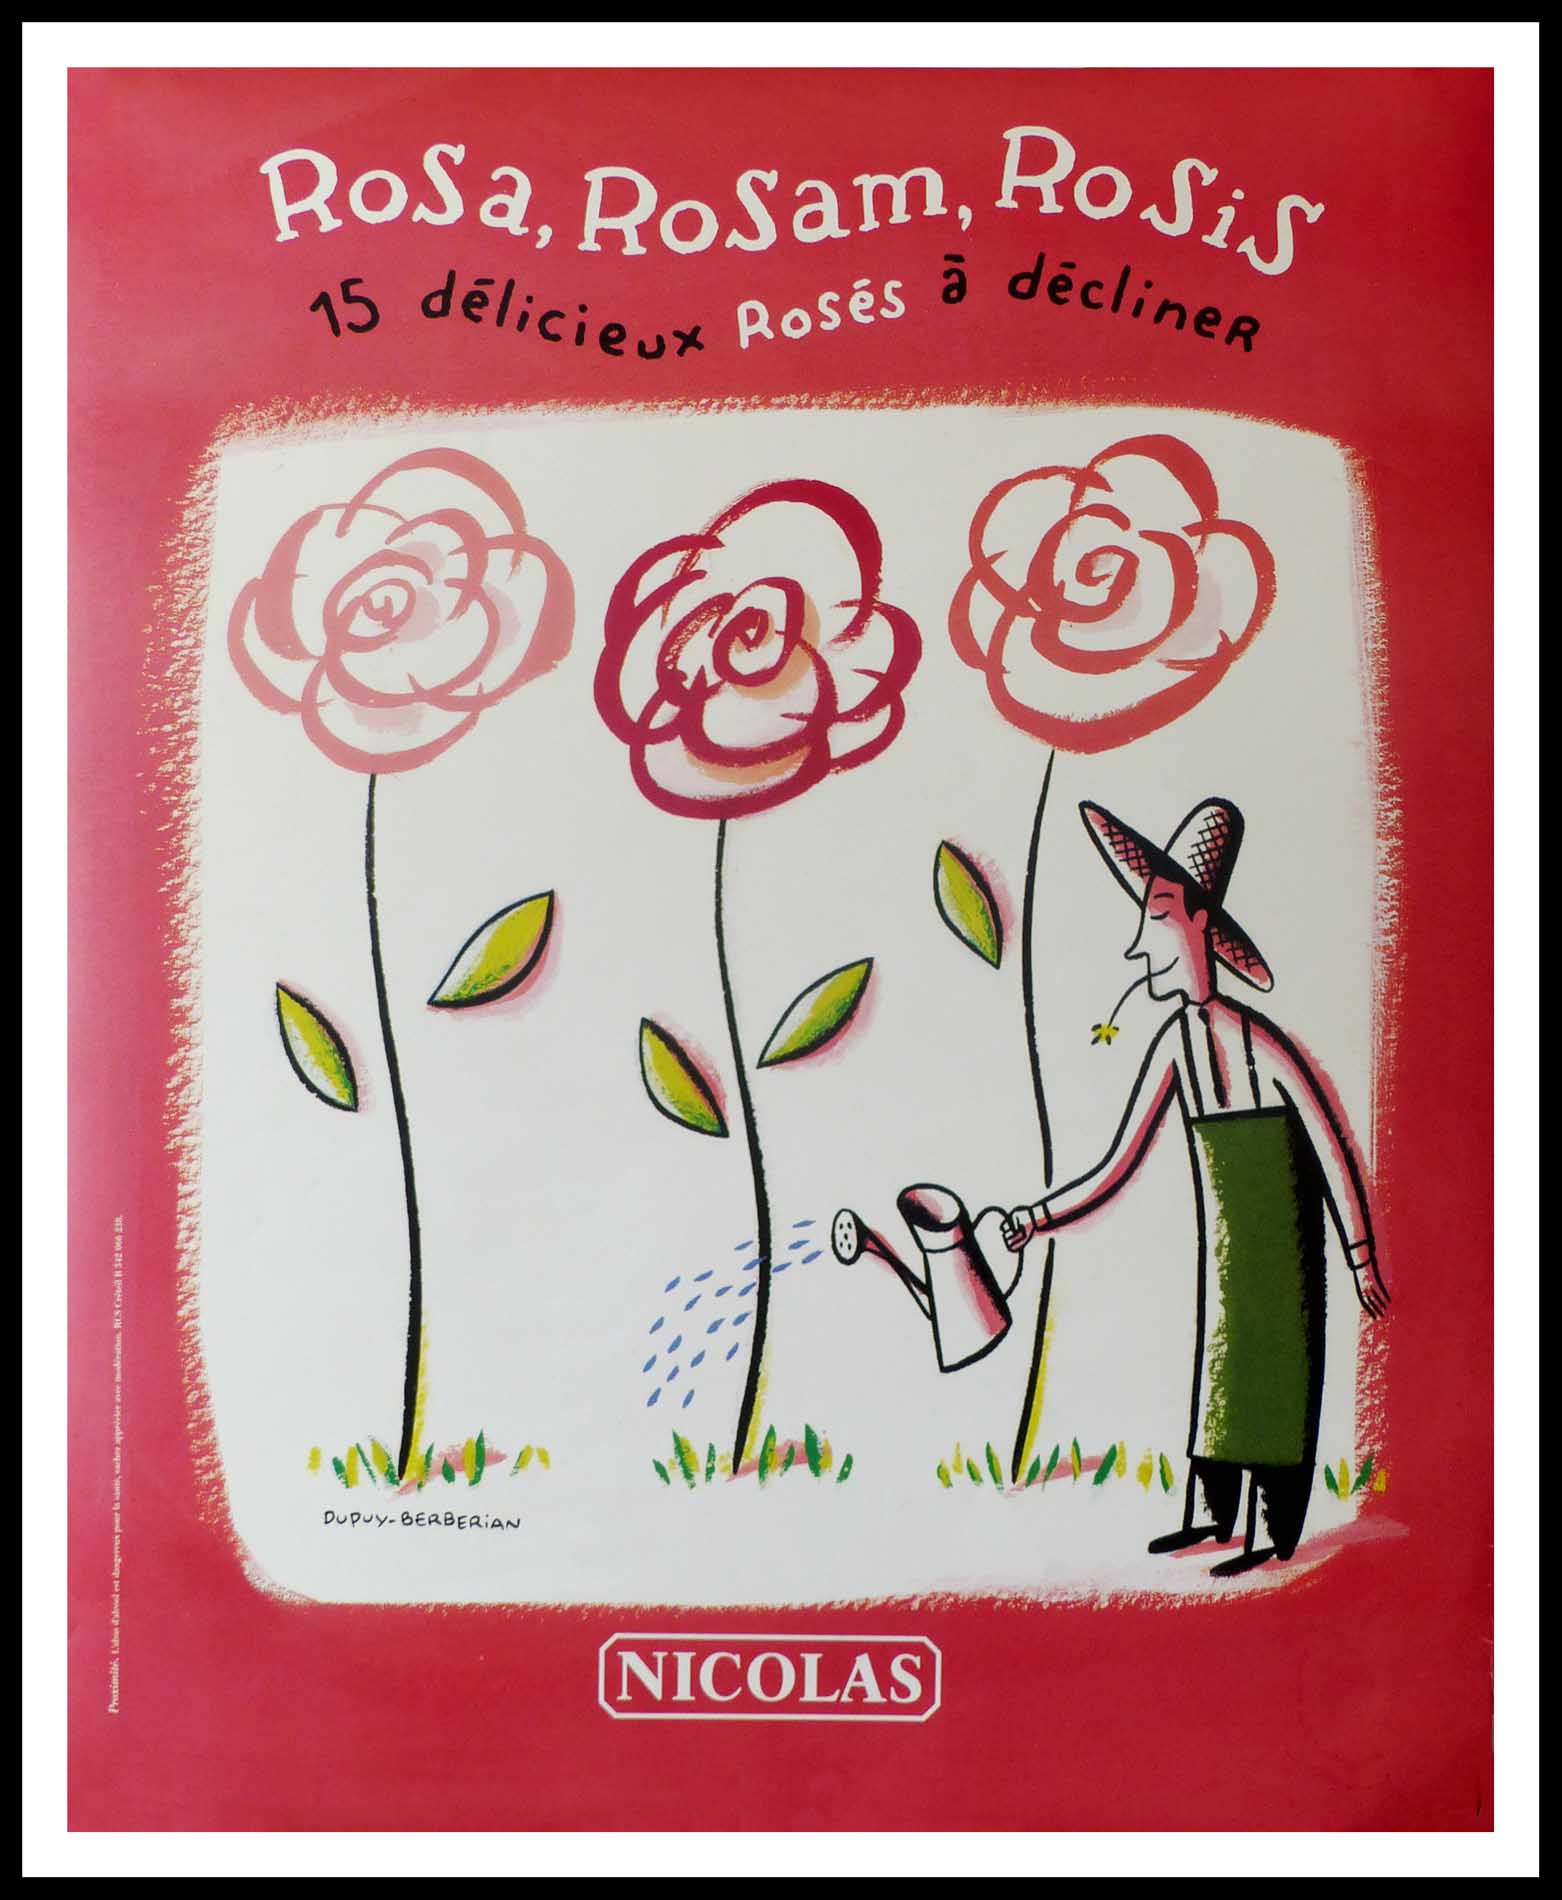 (alt="affiche ancienne originale vin NICOLAS, ROSA ROSAM ROSIS NICOLAS size 98 x 80 cm condition A+ OFF LINEN circa 1990 DUPUY-BEBERIAN printed by PROXIMITE")